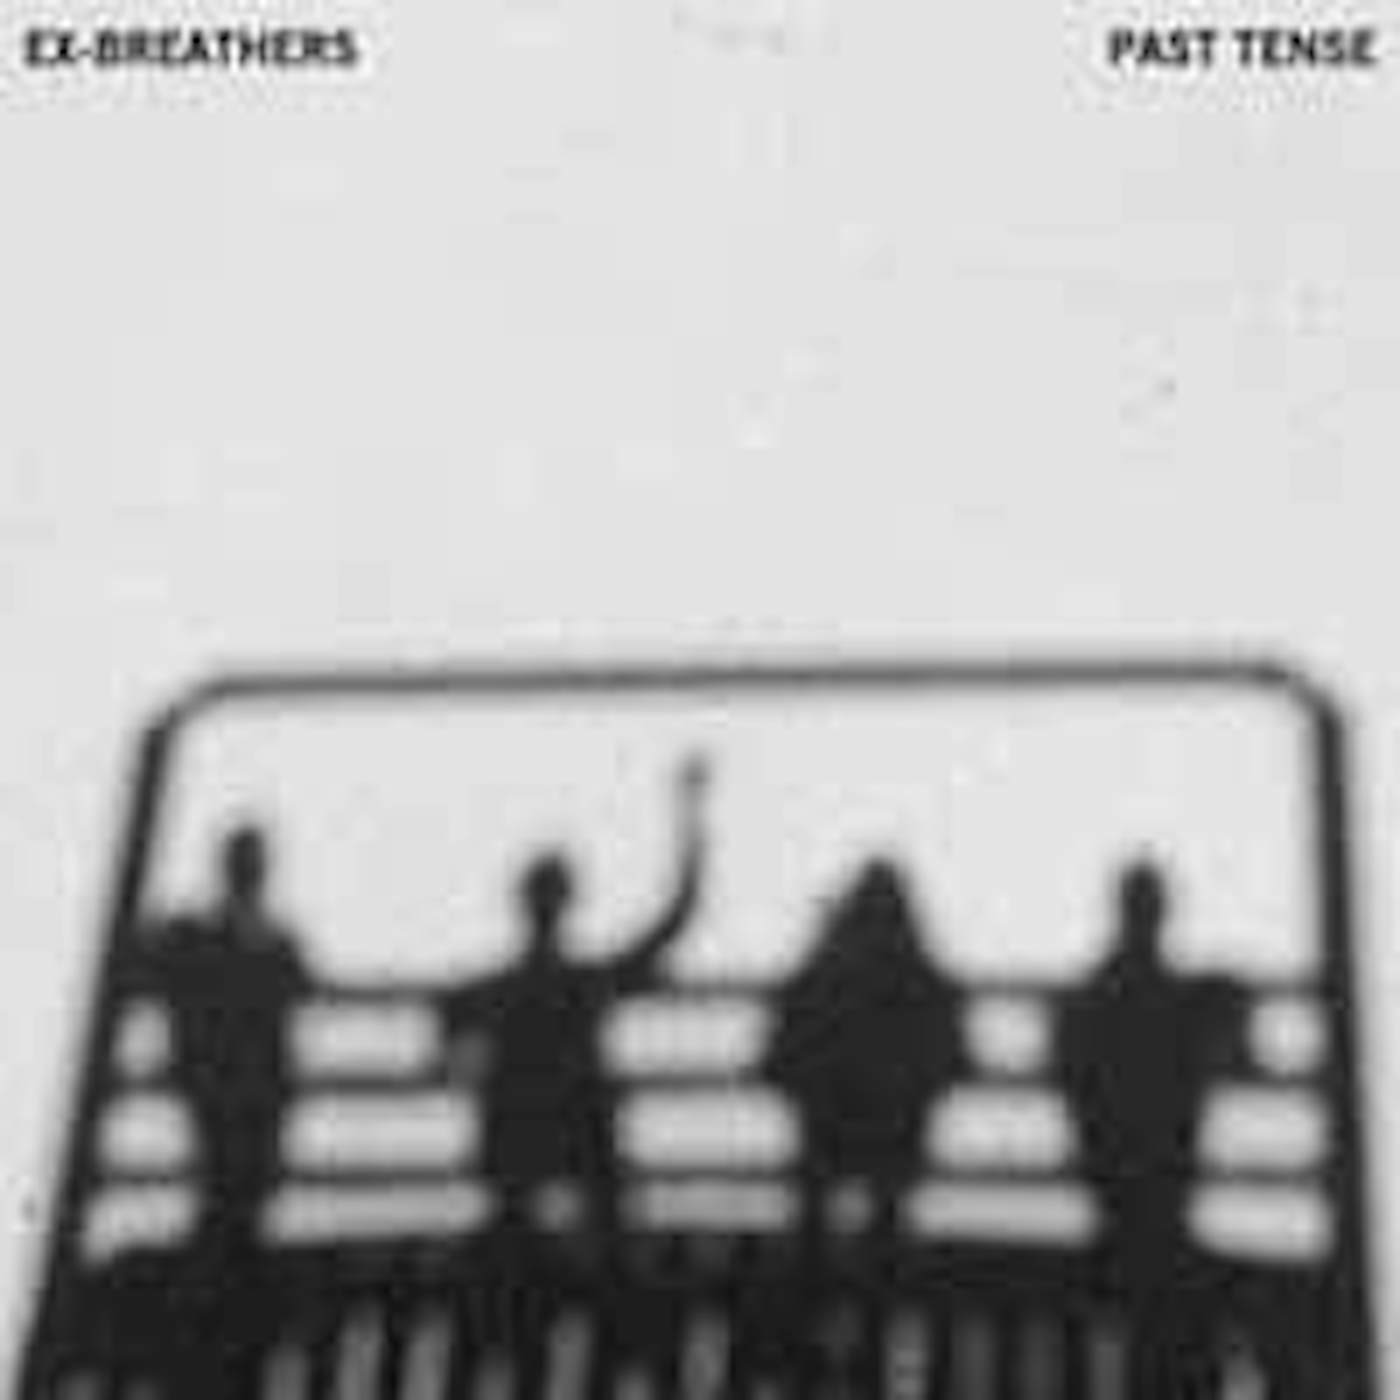 Ex-Breathers LP - Past Tense (Vinyl)